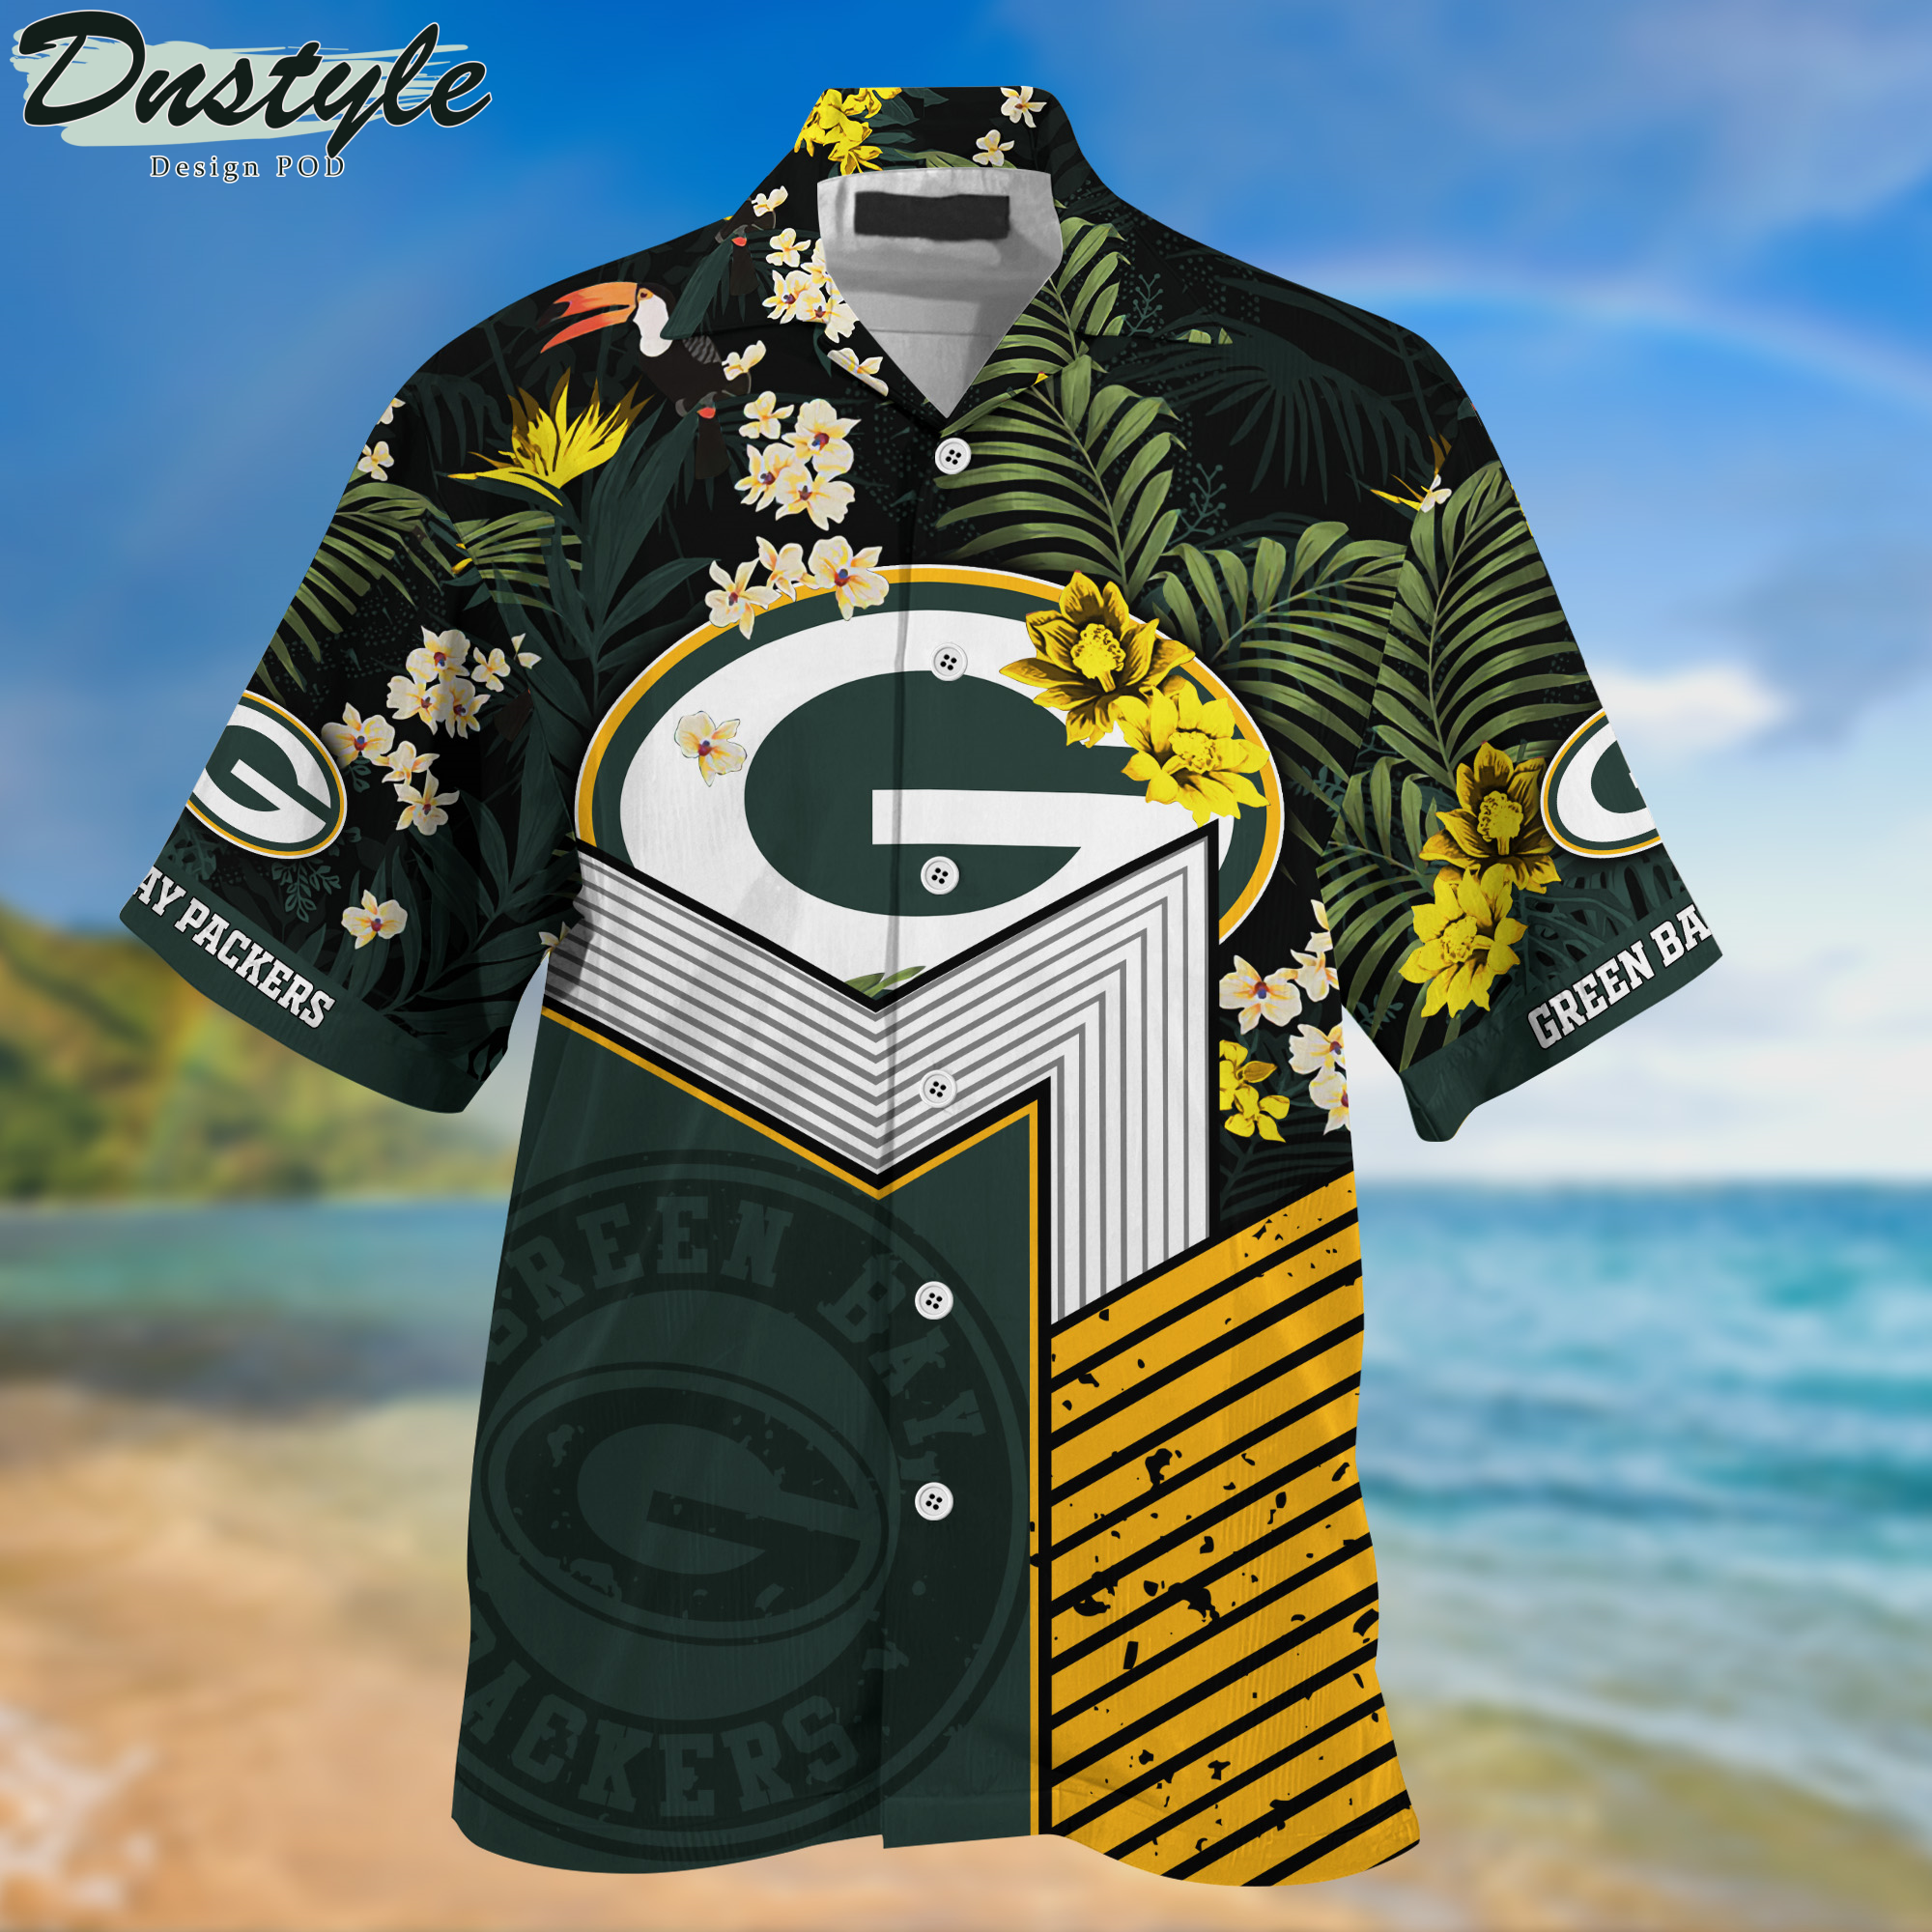 Green Bay Packers Hawaii Shirt And Shorts New Collection